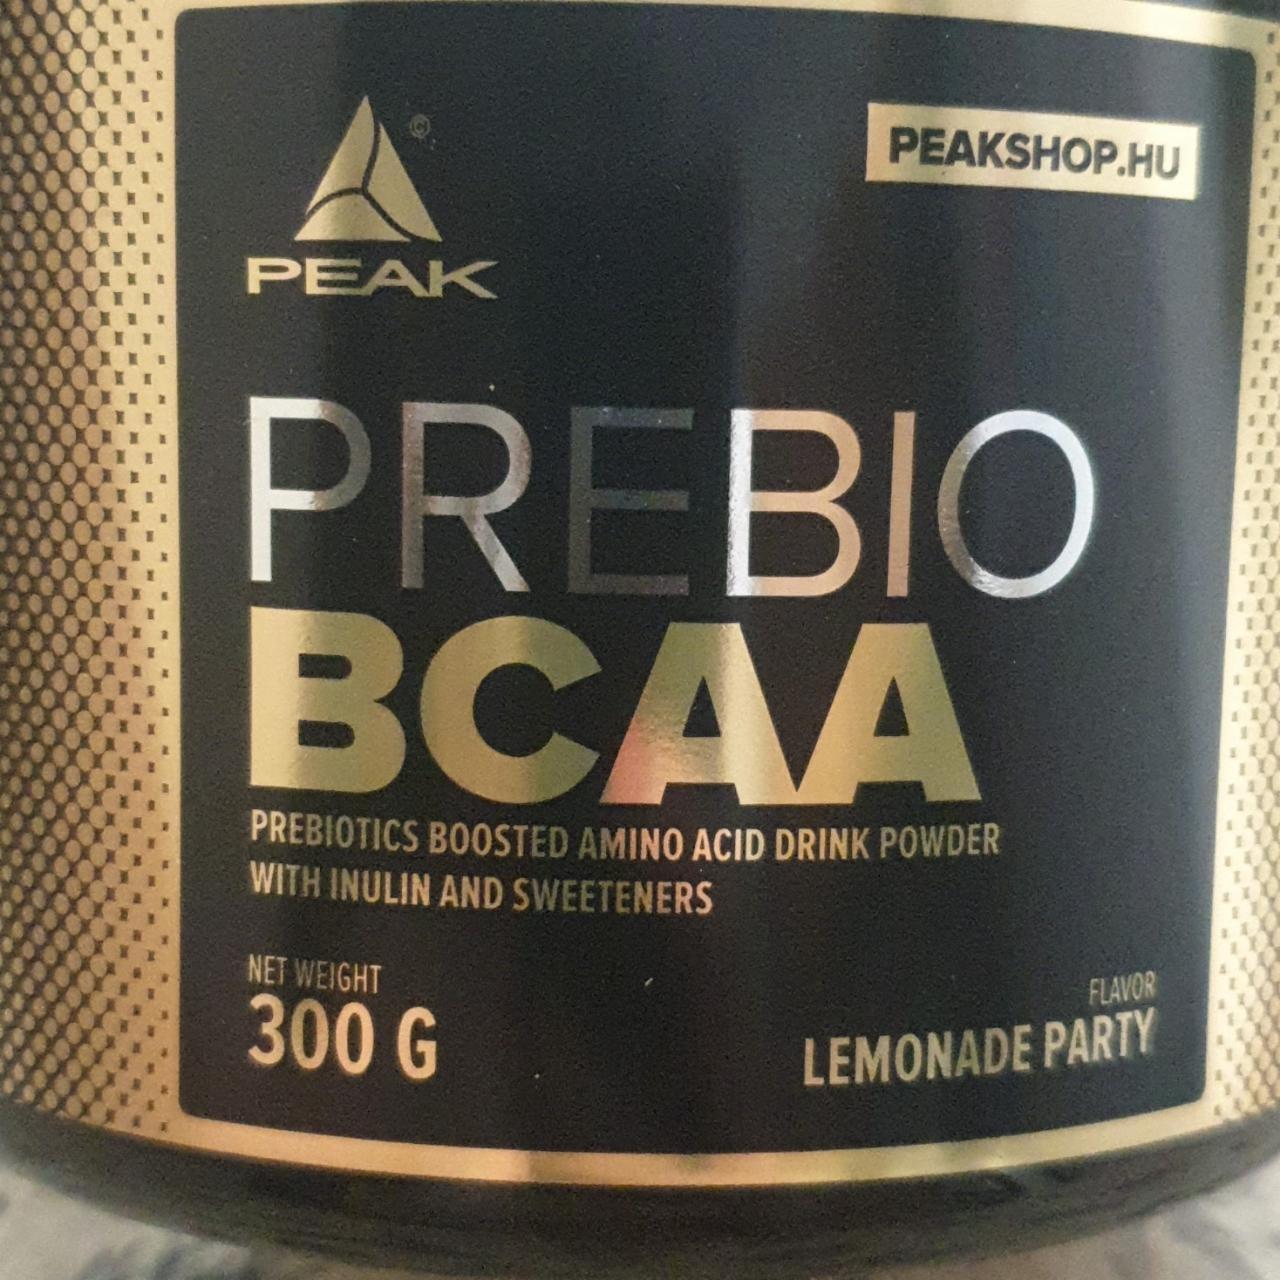 Képek - Prebio BCAA citrus ízű Peak